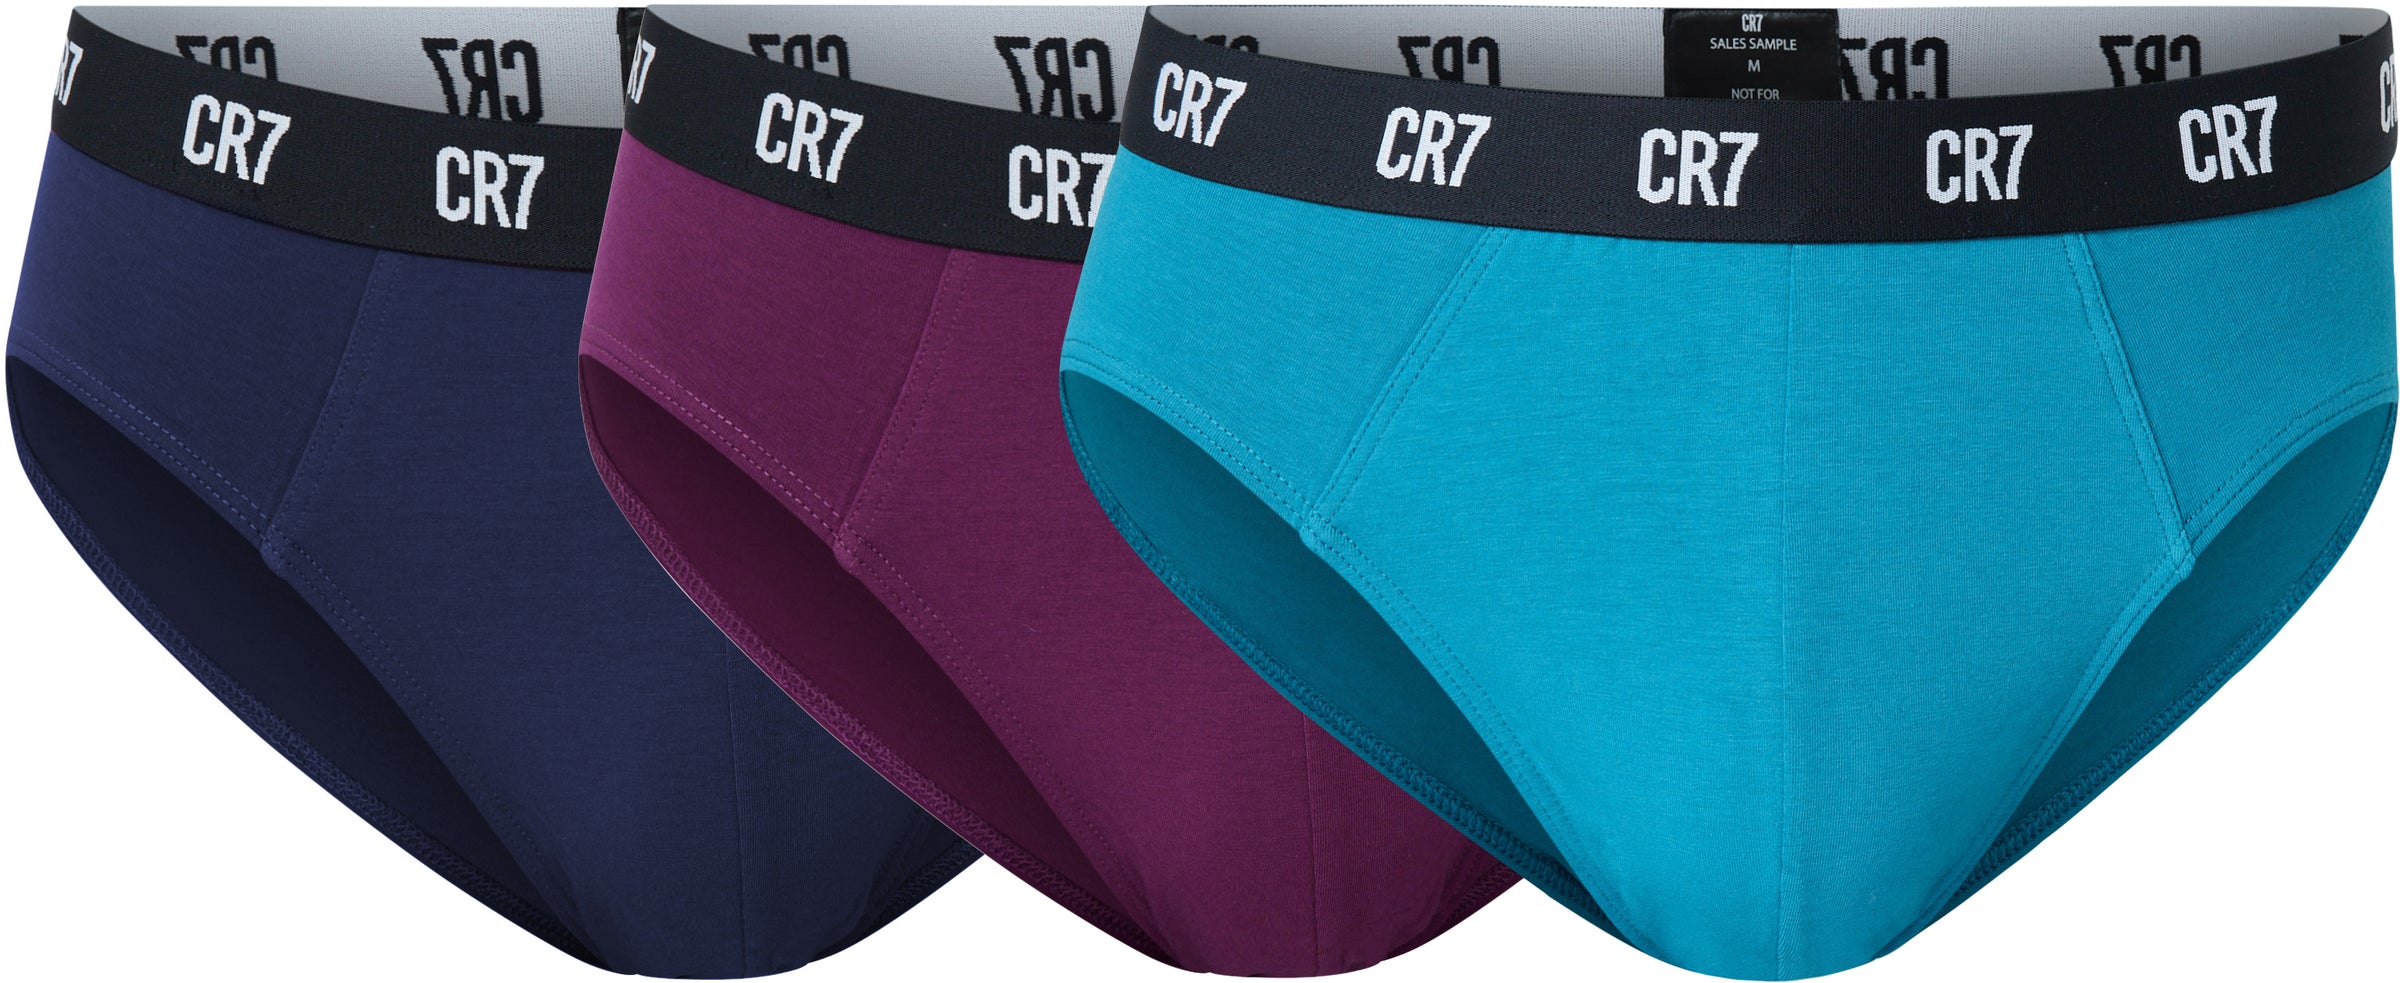 CR7 Underwear Australia - Official Australia Store